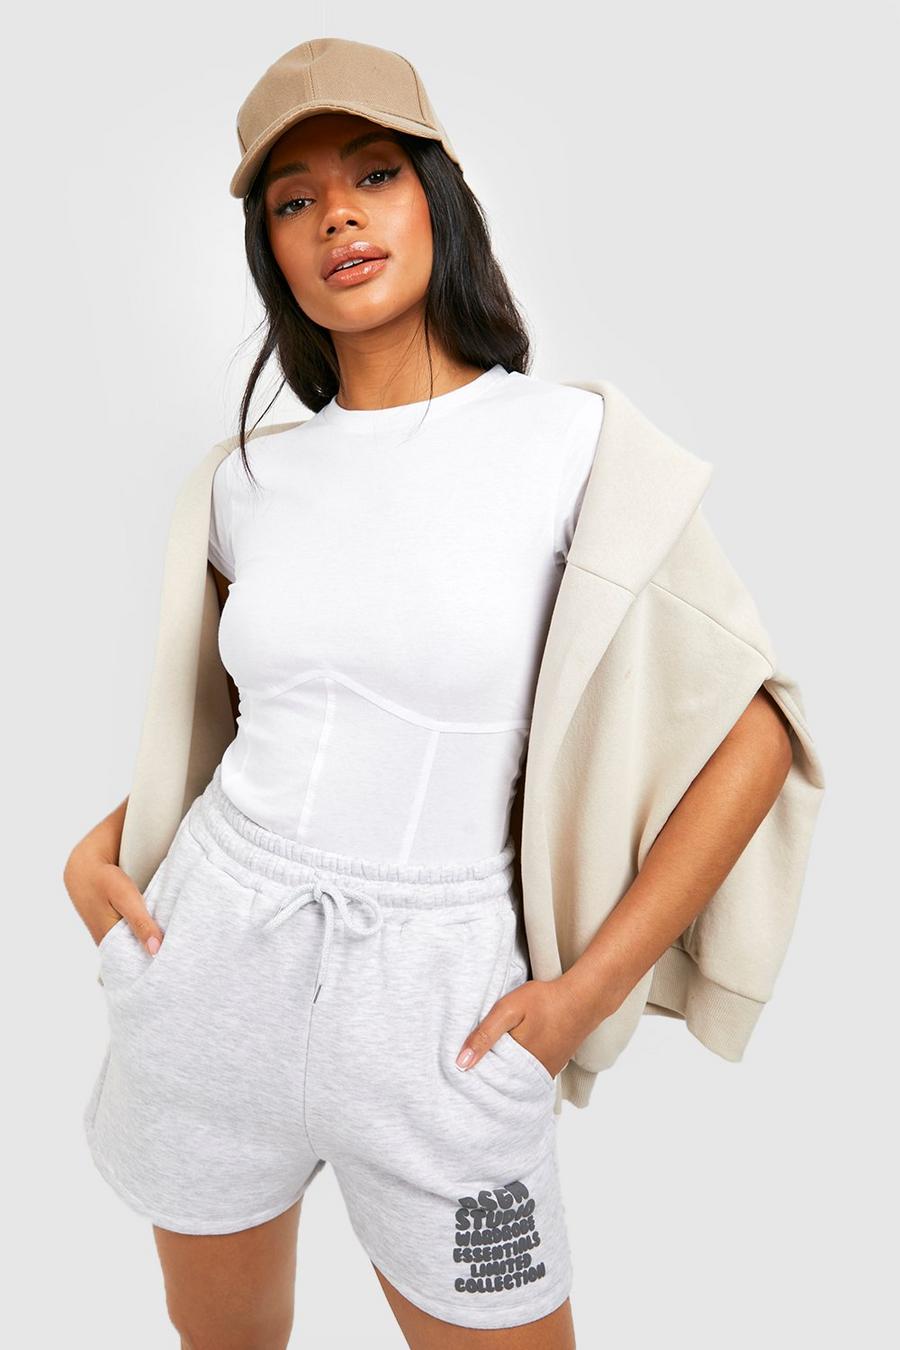 https://media.boohoo.com/i/boohoo/gzz50292_white_xl/female-white-corset-detail-t-shirt/?w=900&qlt=default&fmt.jp2.qlt=70&fmt=auto&sm=fit